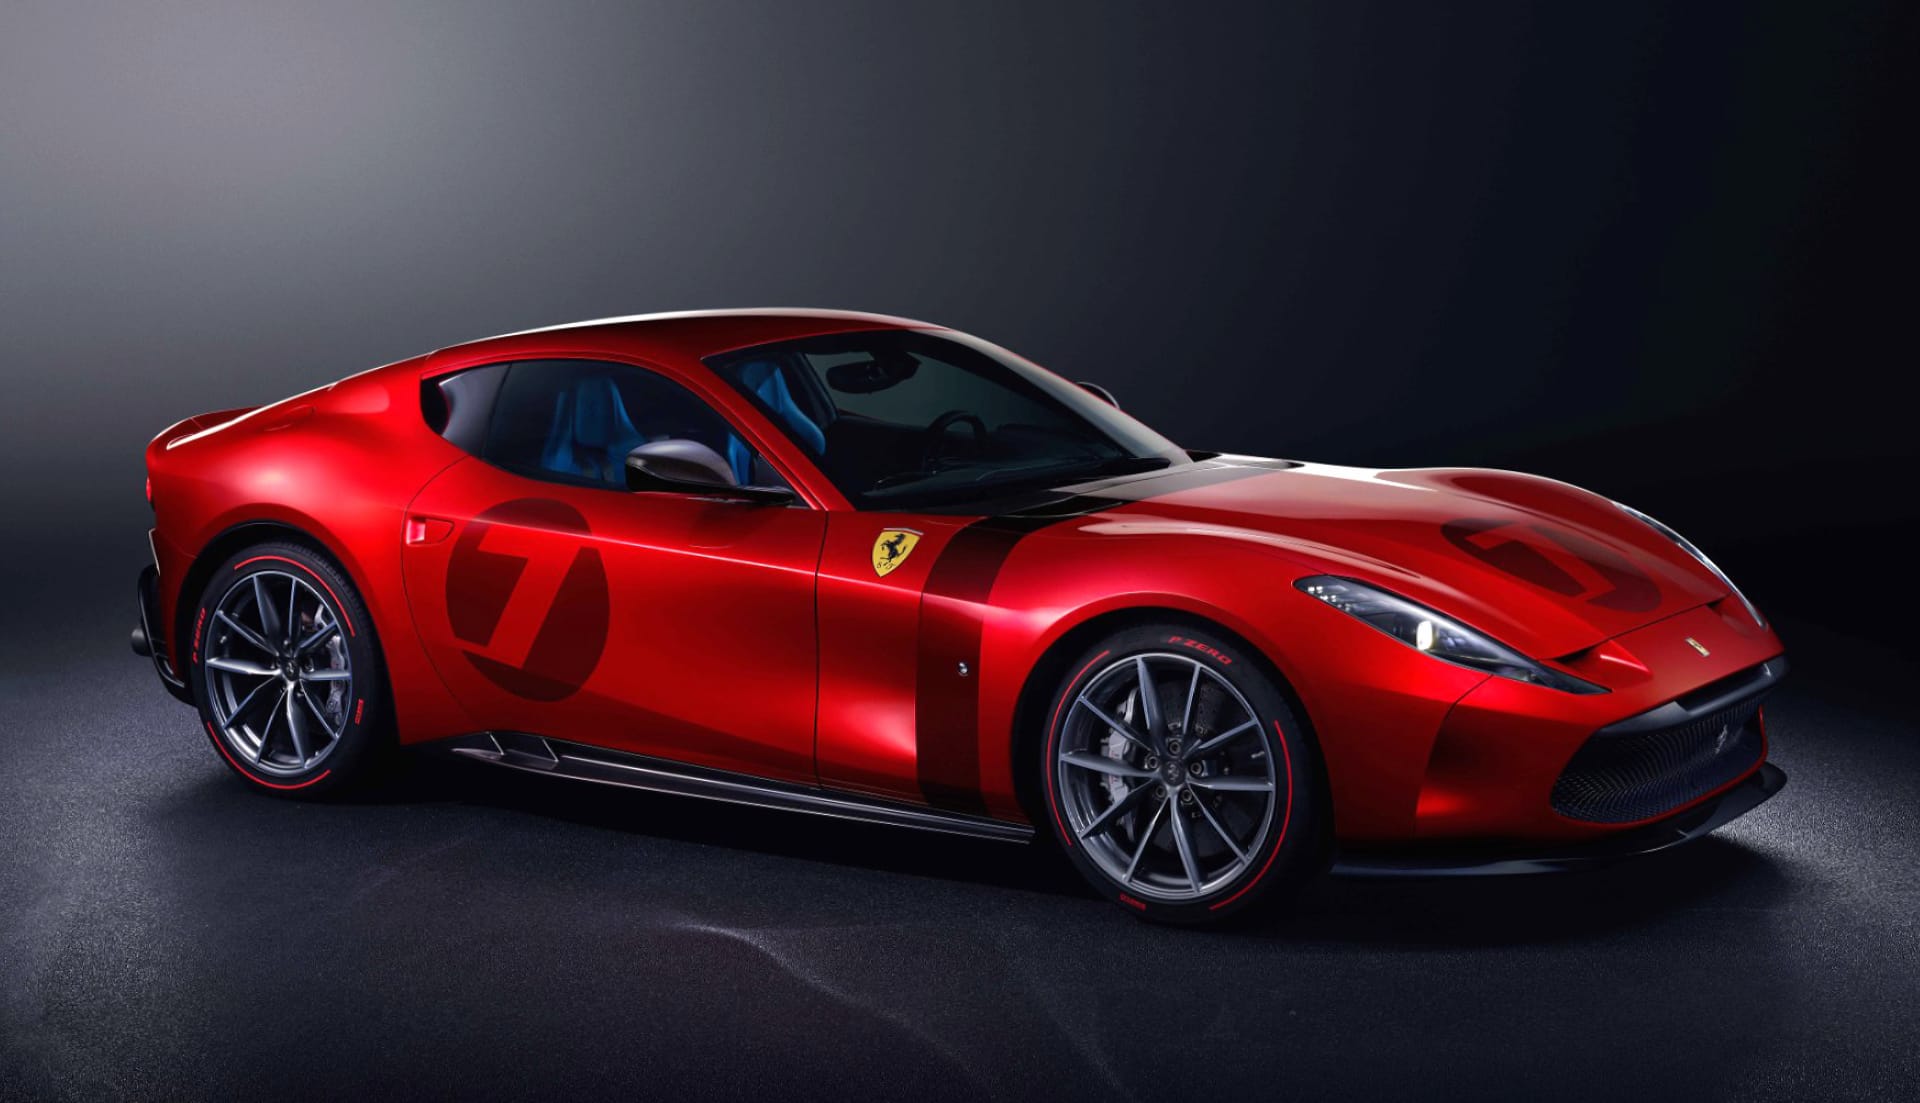 Ferrari Omologata at 1600 x 1200 size wallpapers HD quality